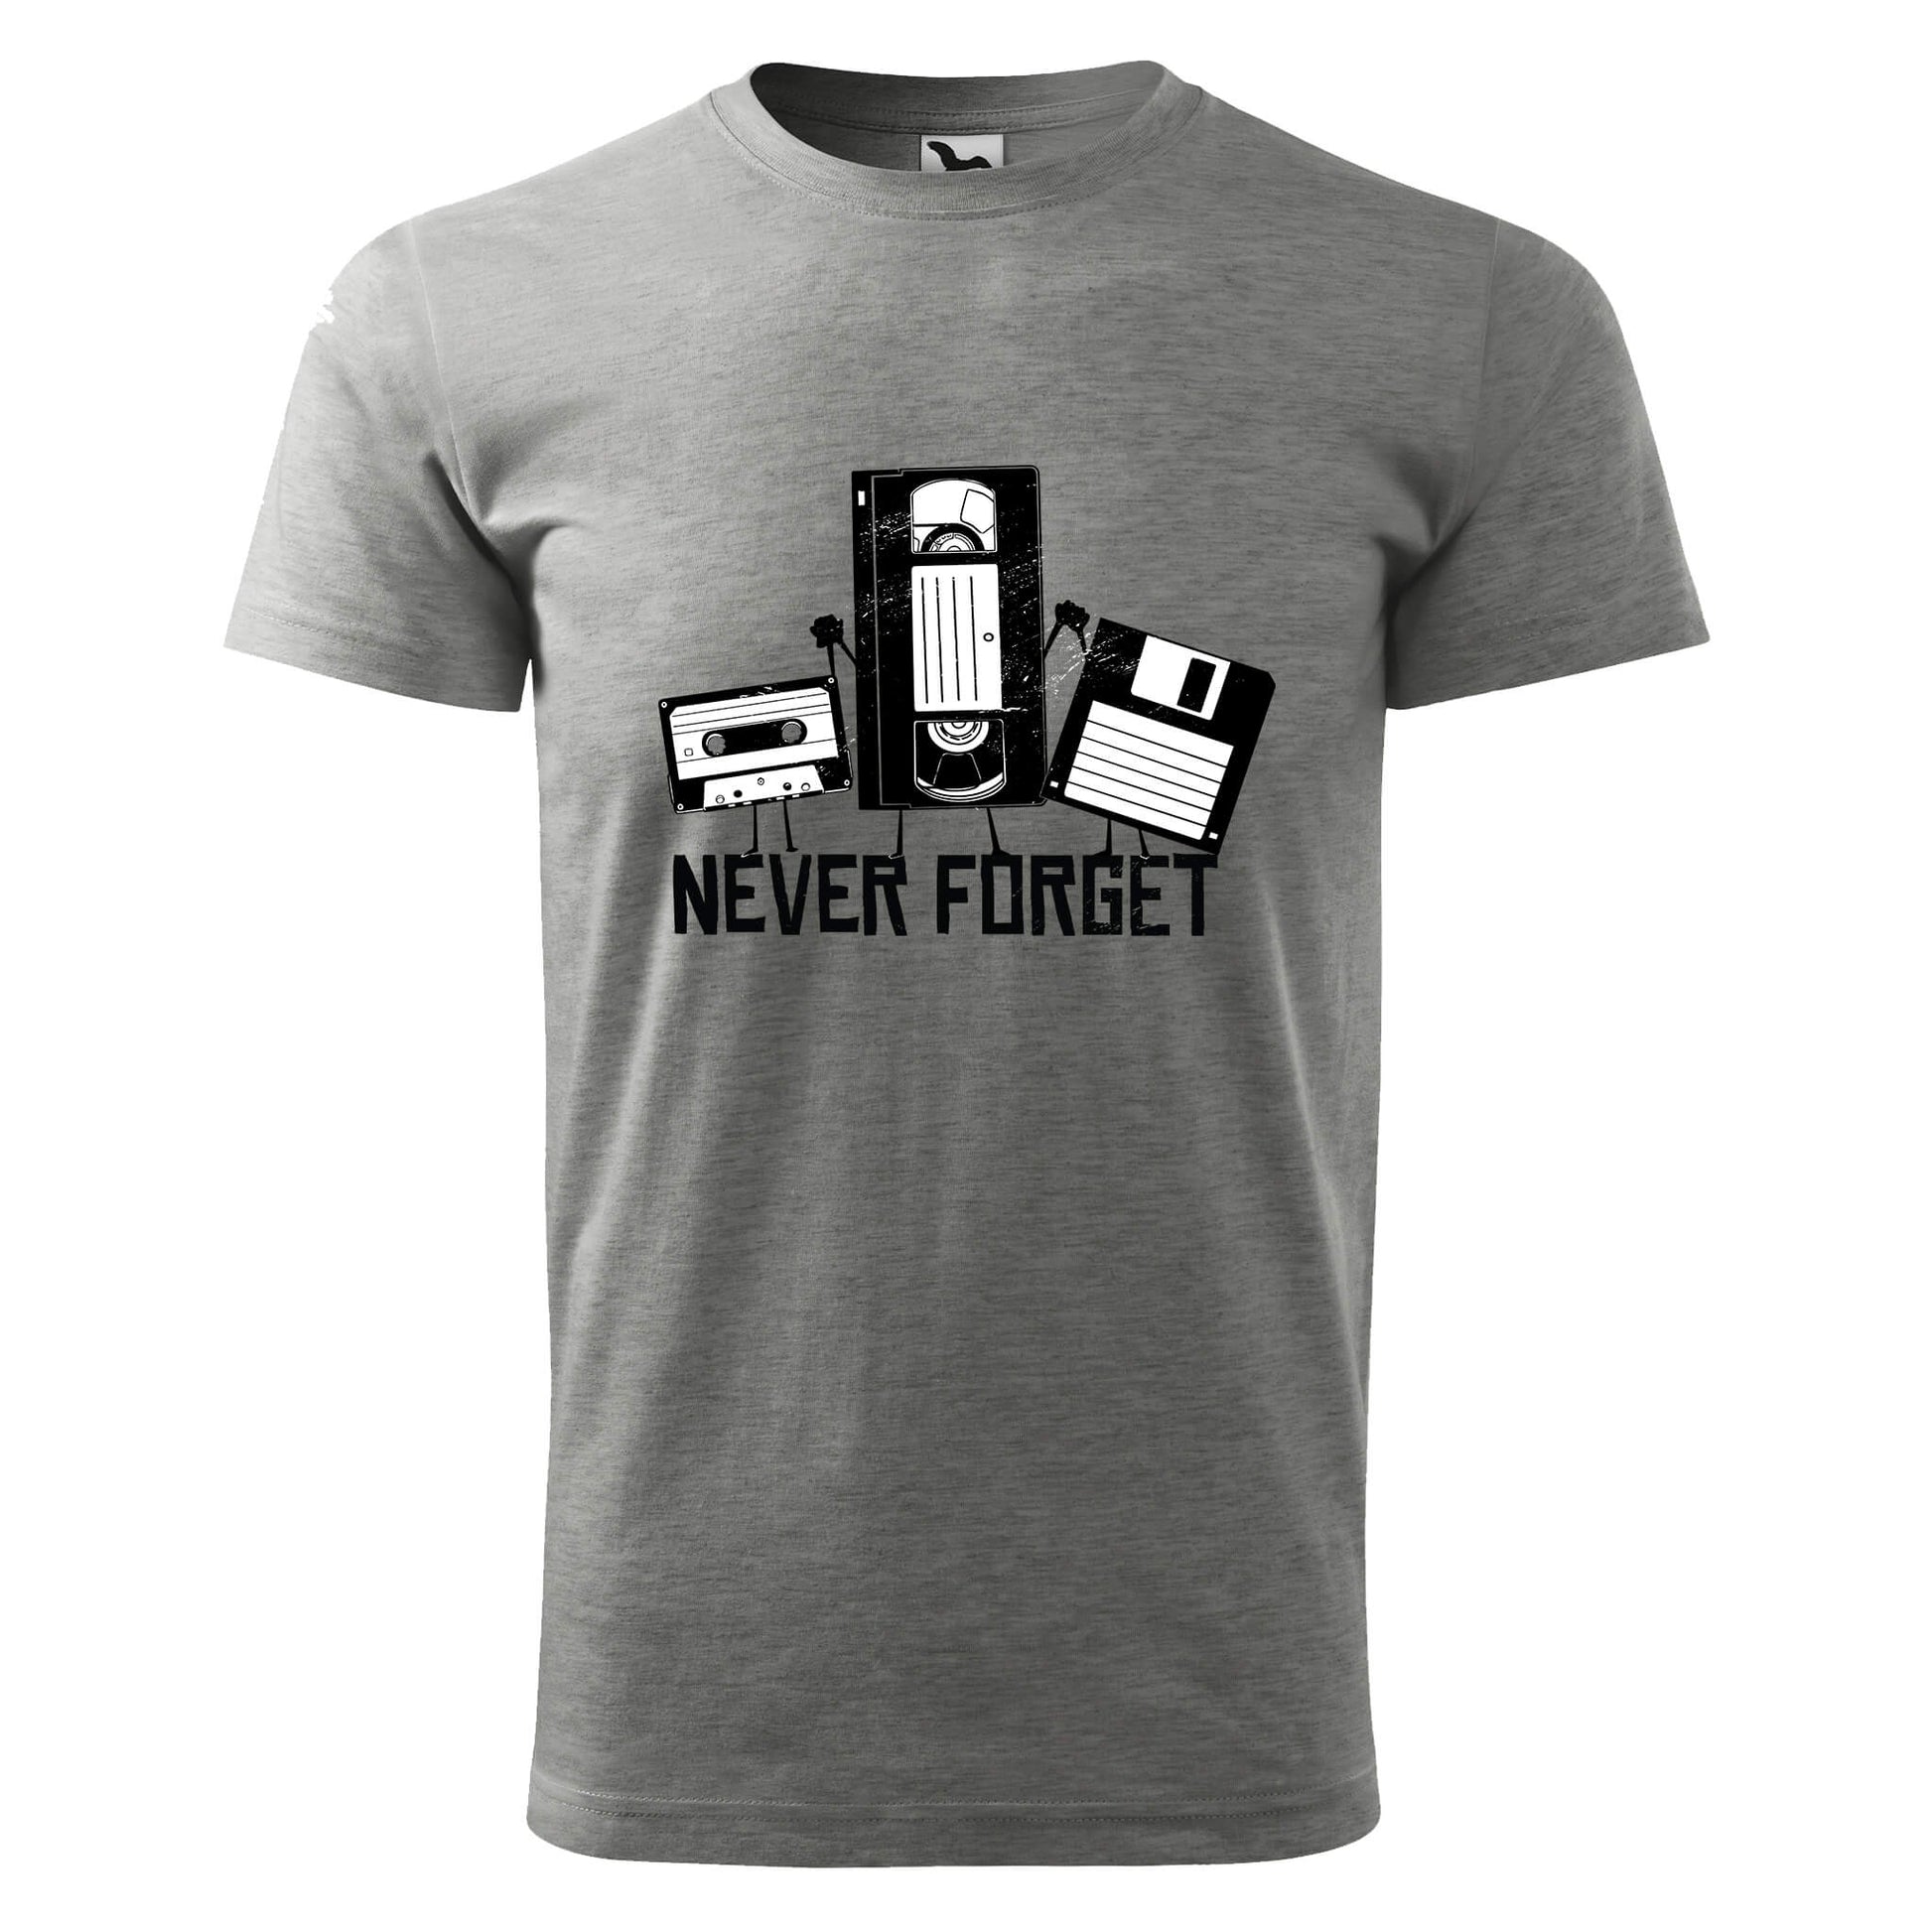 Never forget t-shirt - rvdesignprint